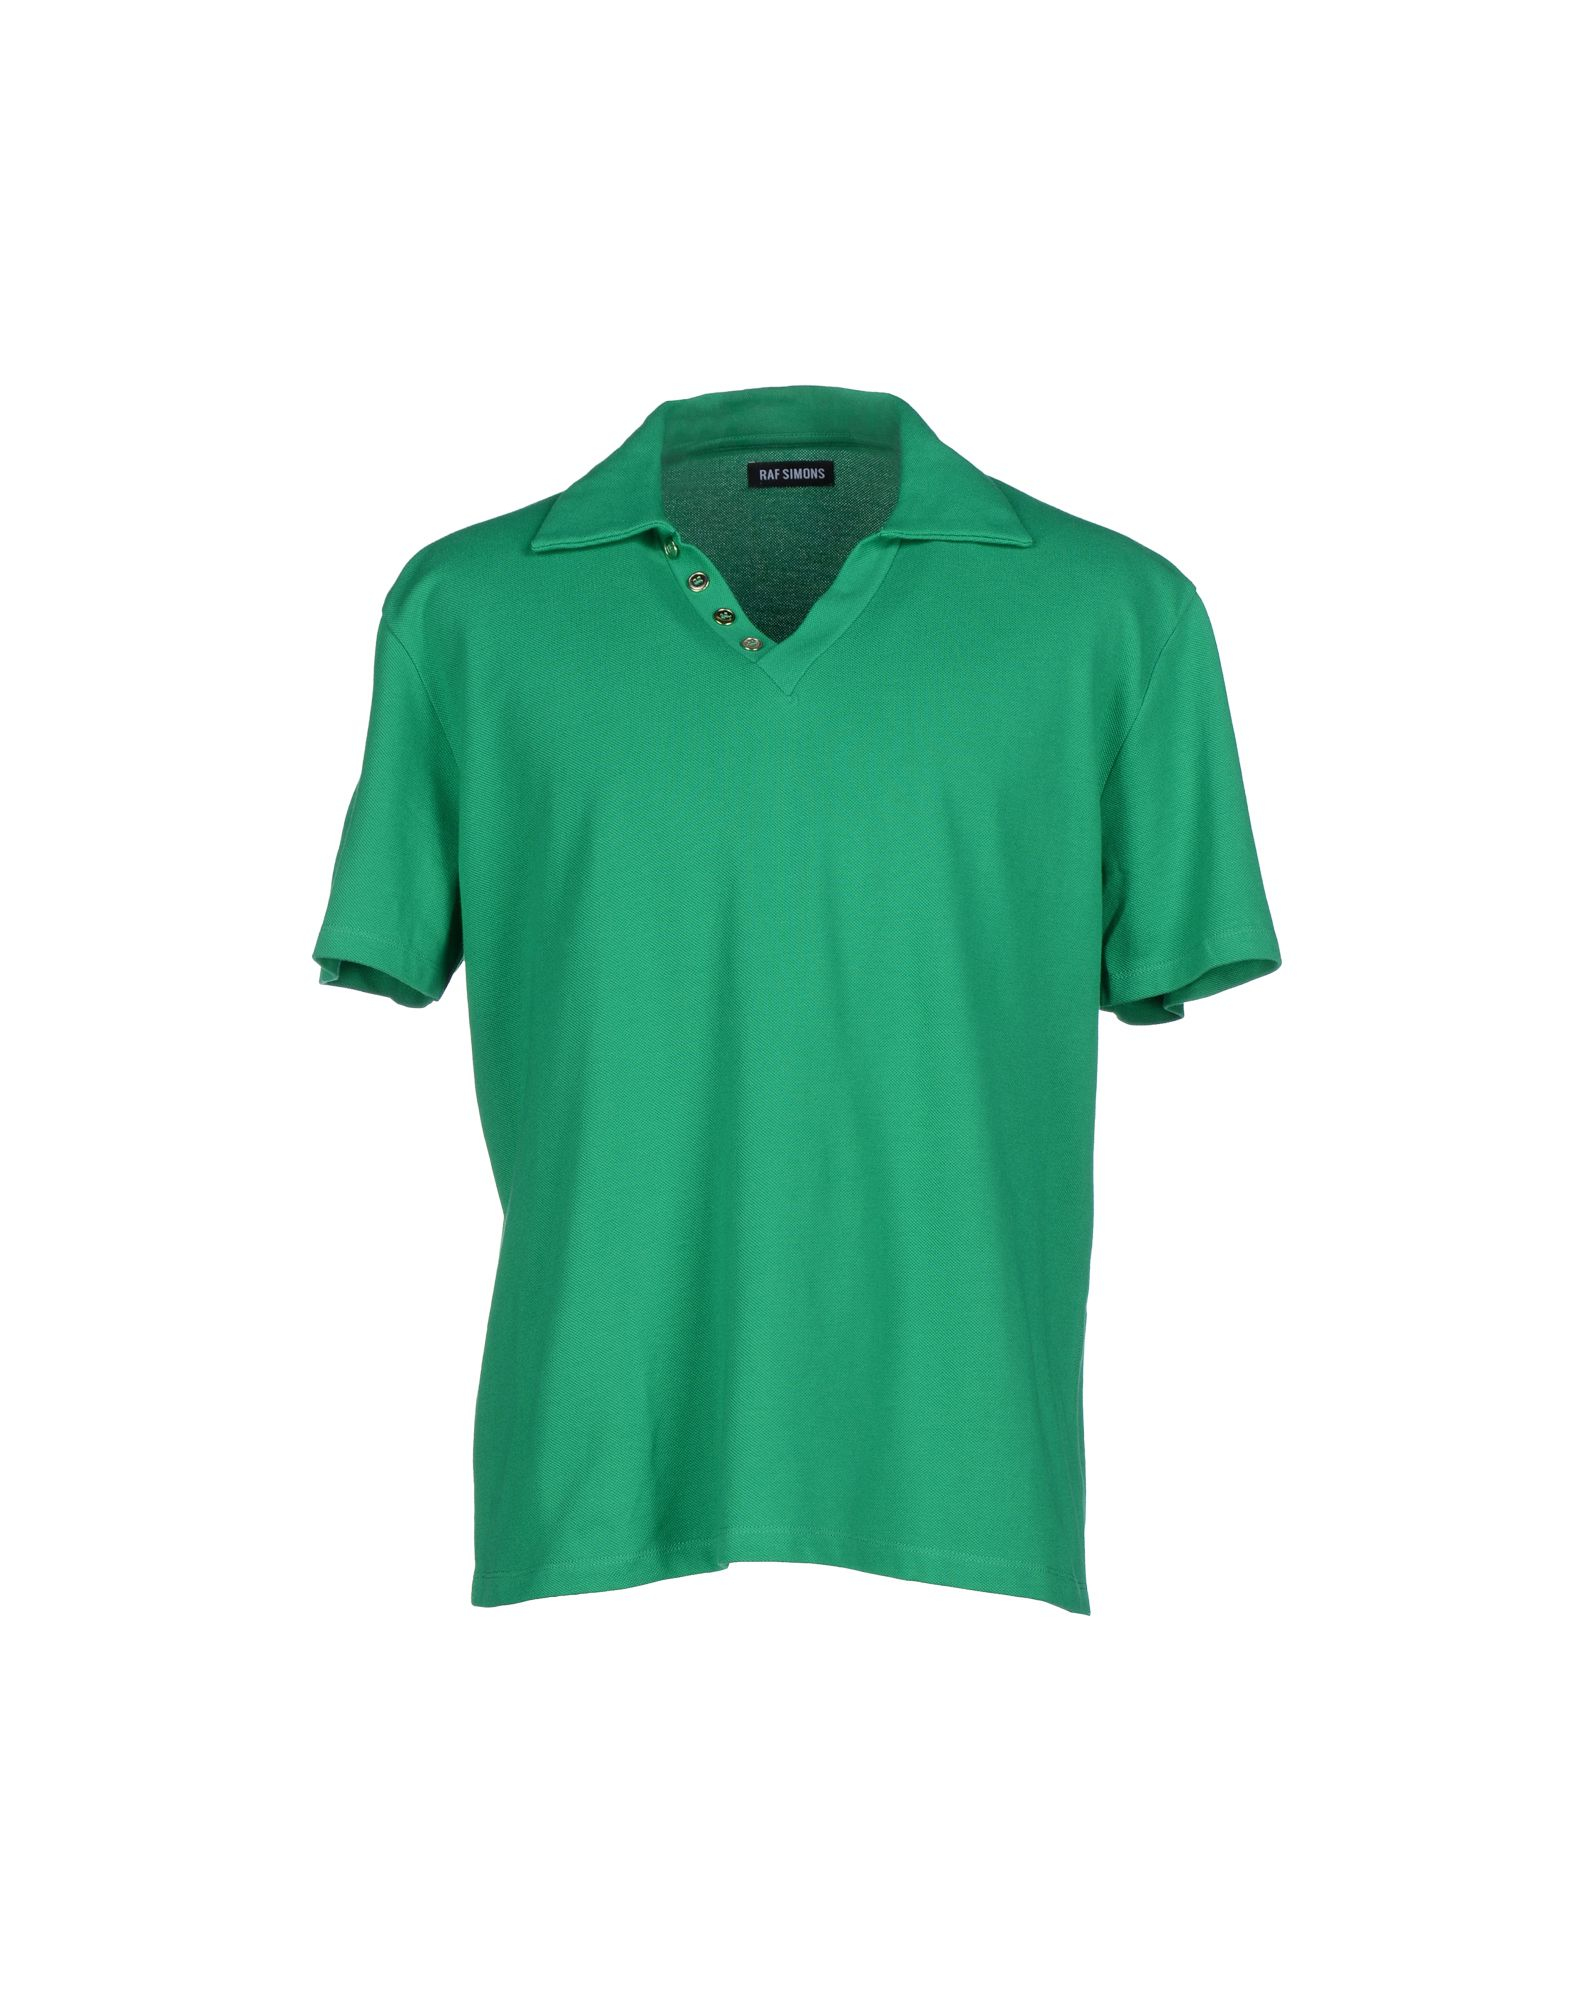 Raf Simons Cotton Polo Shirt in Emerald Green (Green) for Men - Lyst